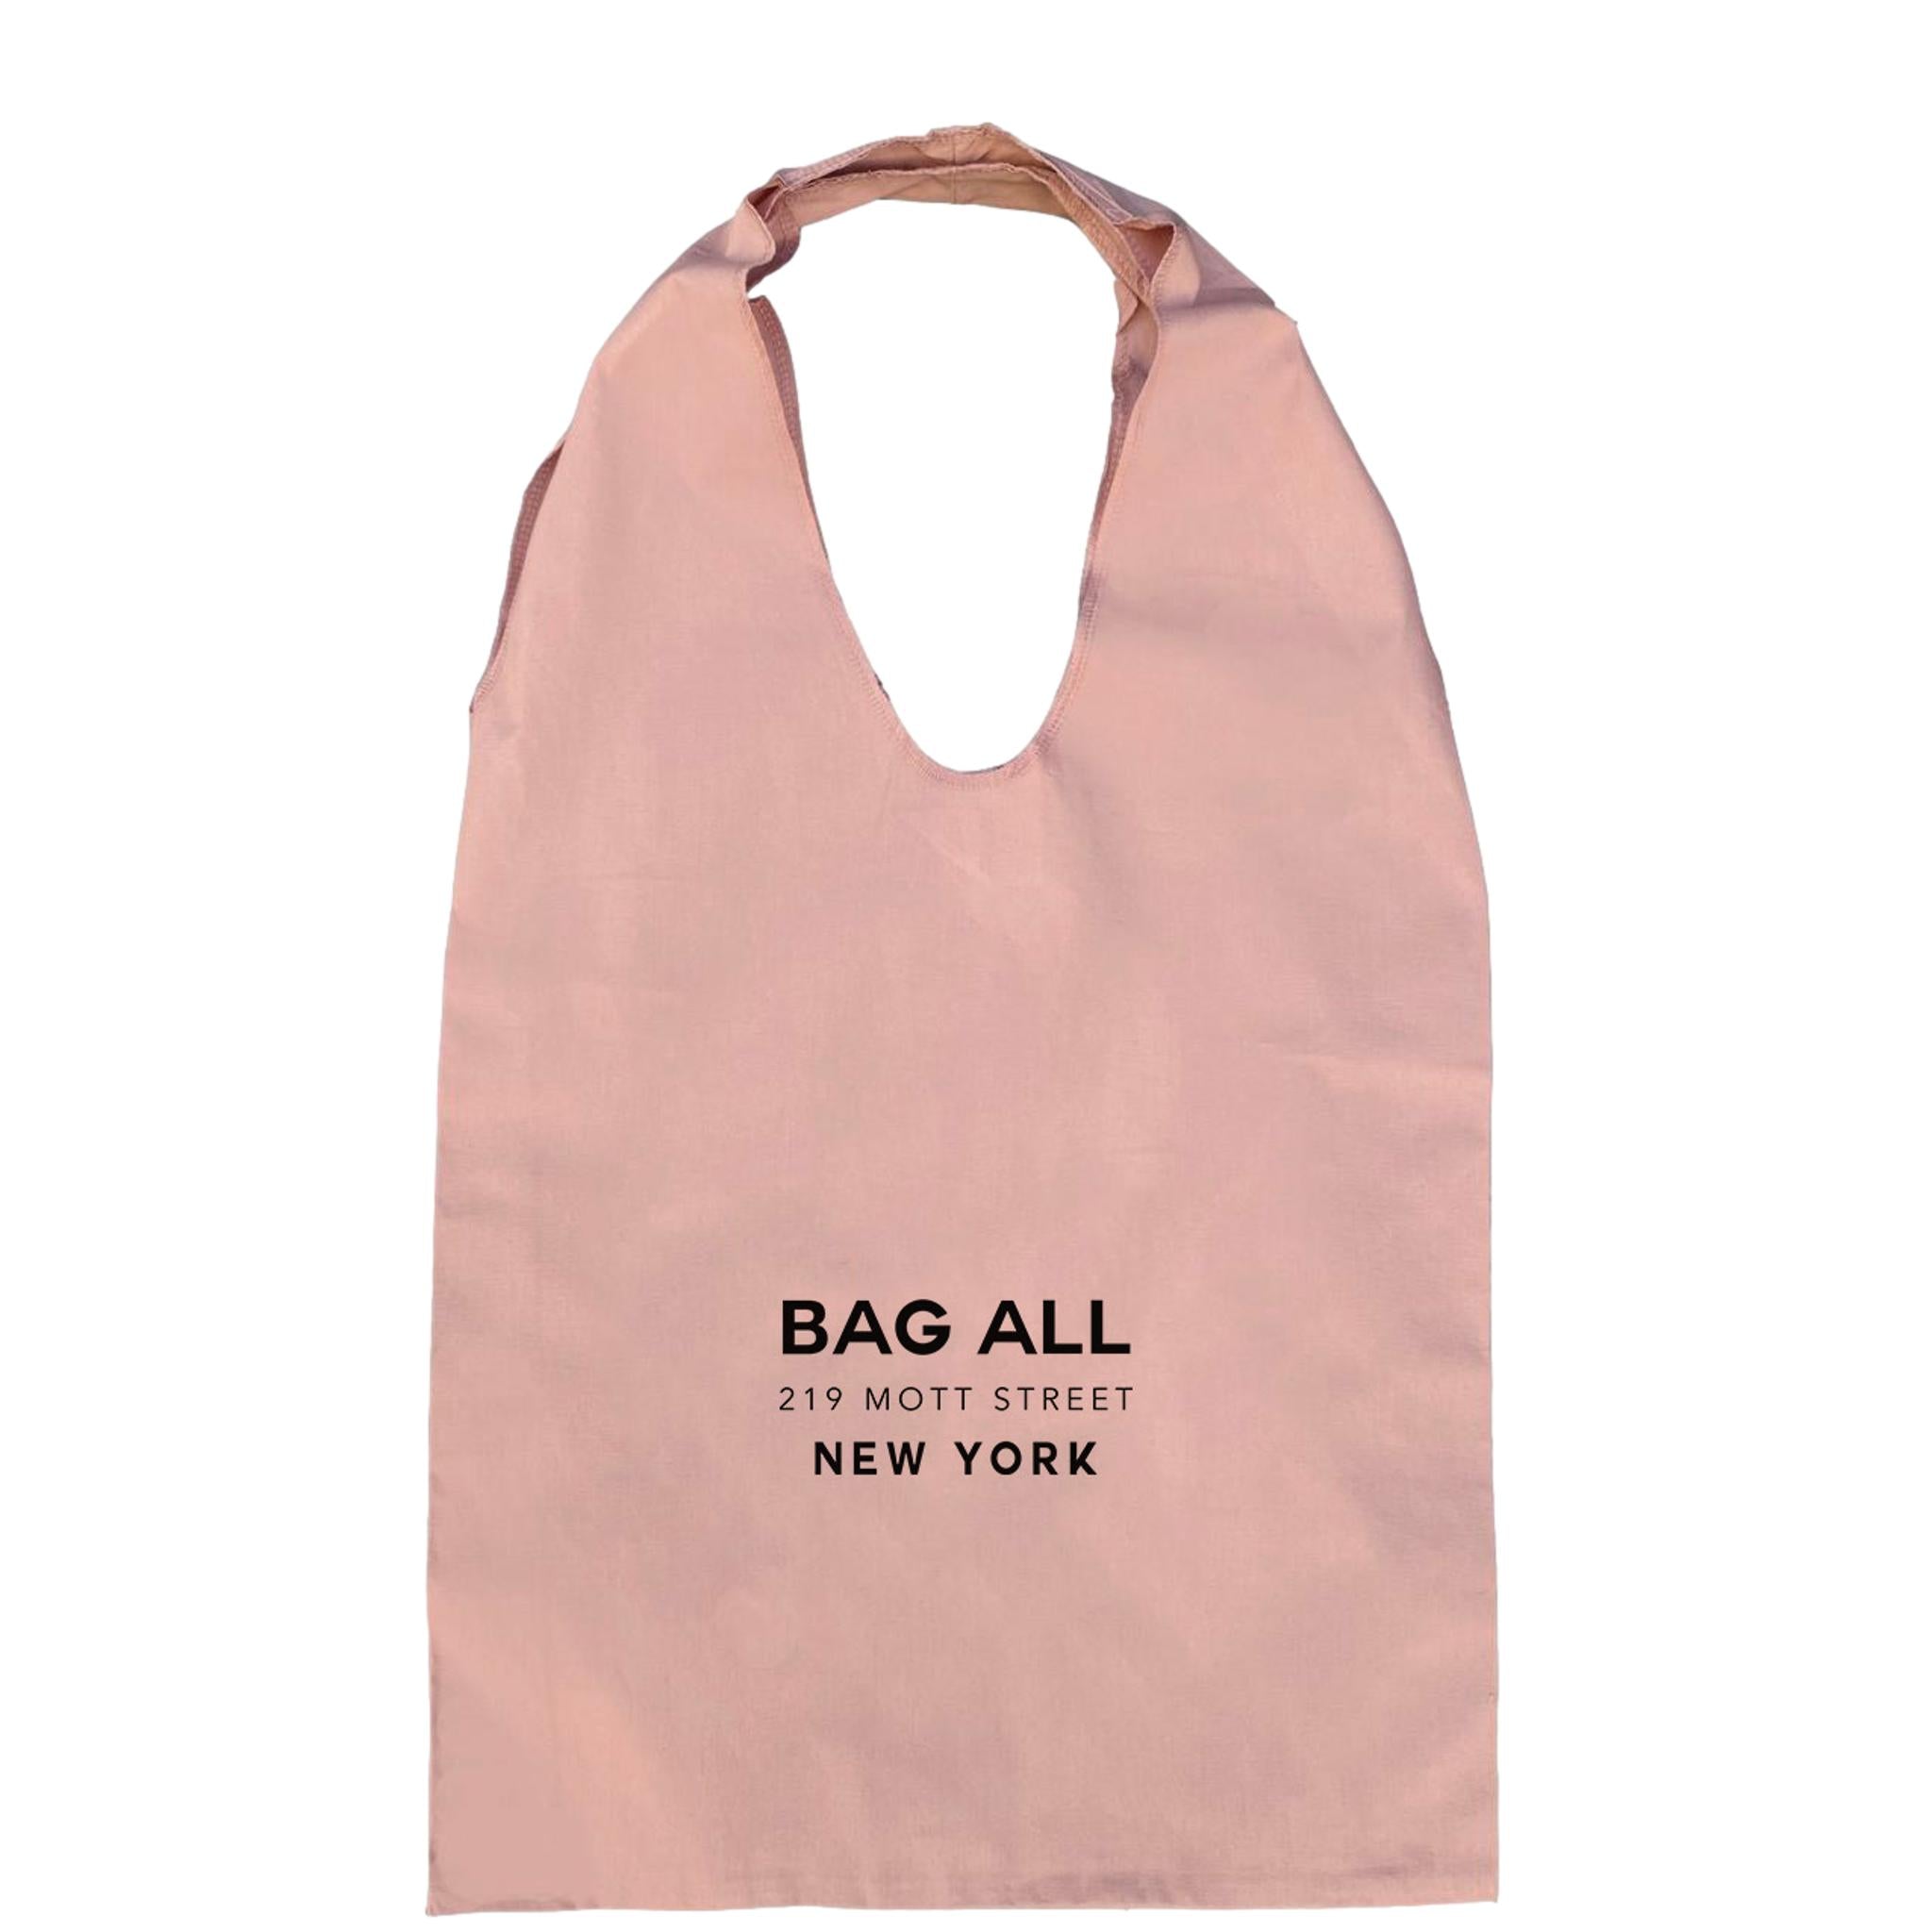 New York Tote Bag Large - Custom Reusable Tote Bags | Bag-all